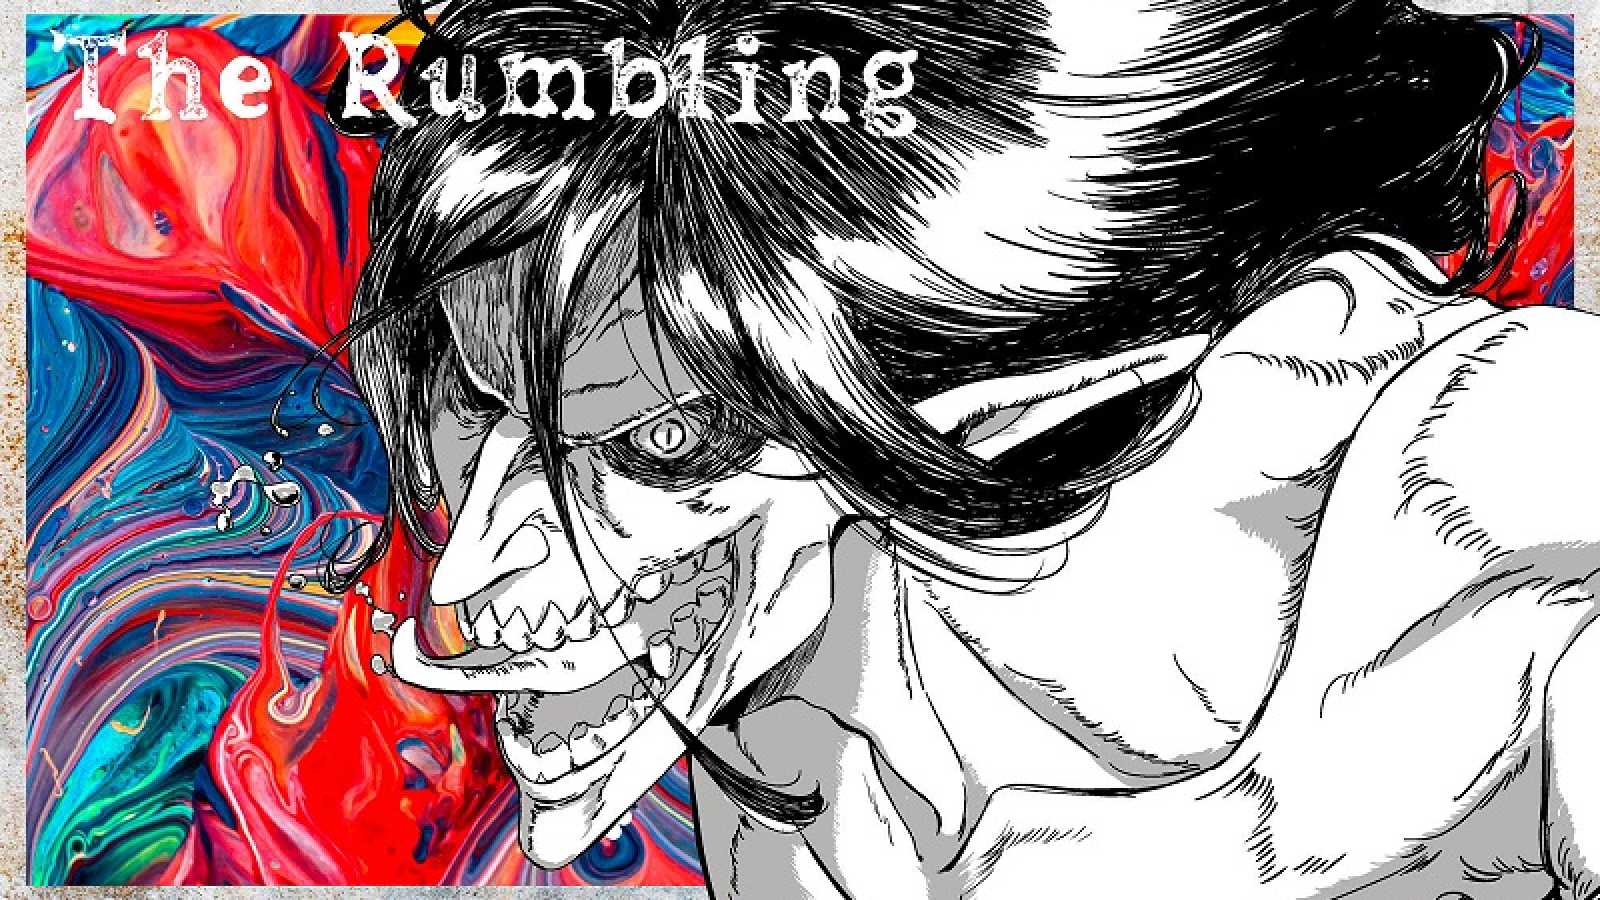 SiM lança versão completa de "The Rumbling" © HK/AOTF. All rights reserved.